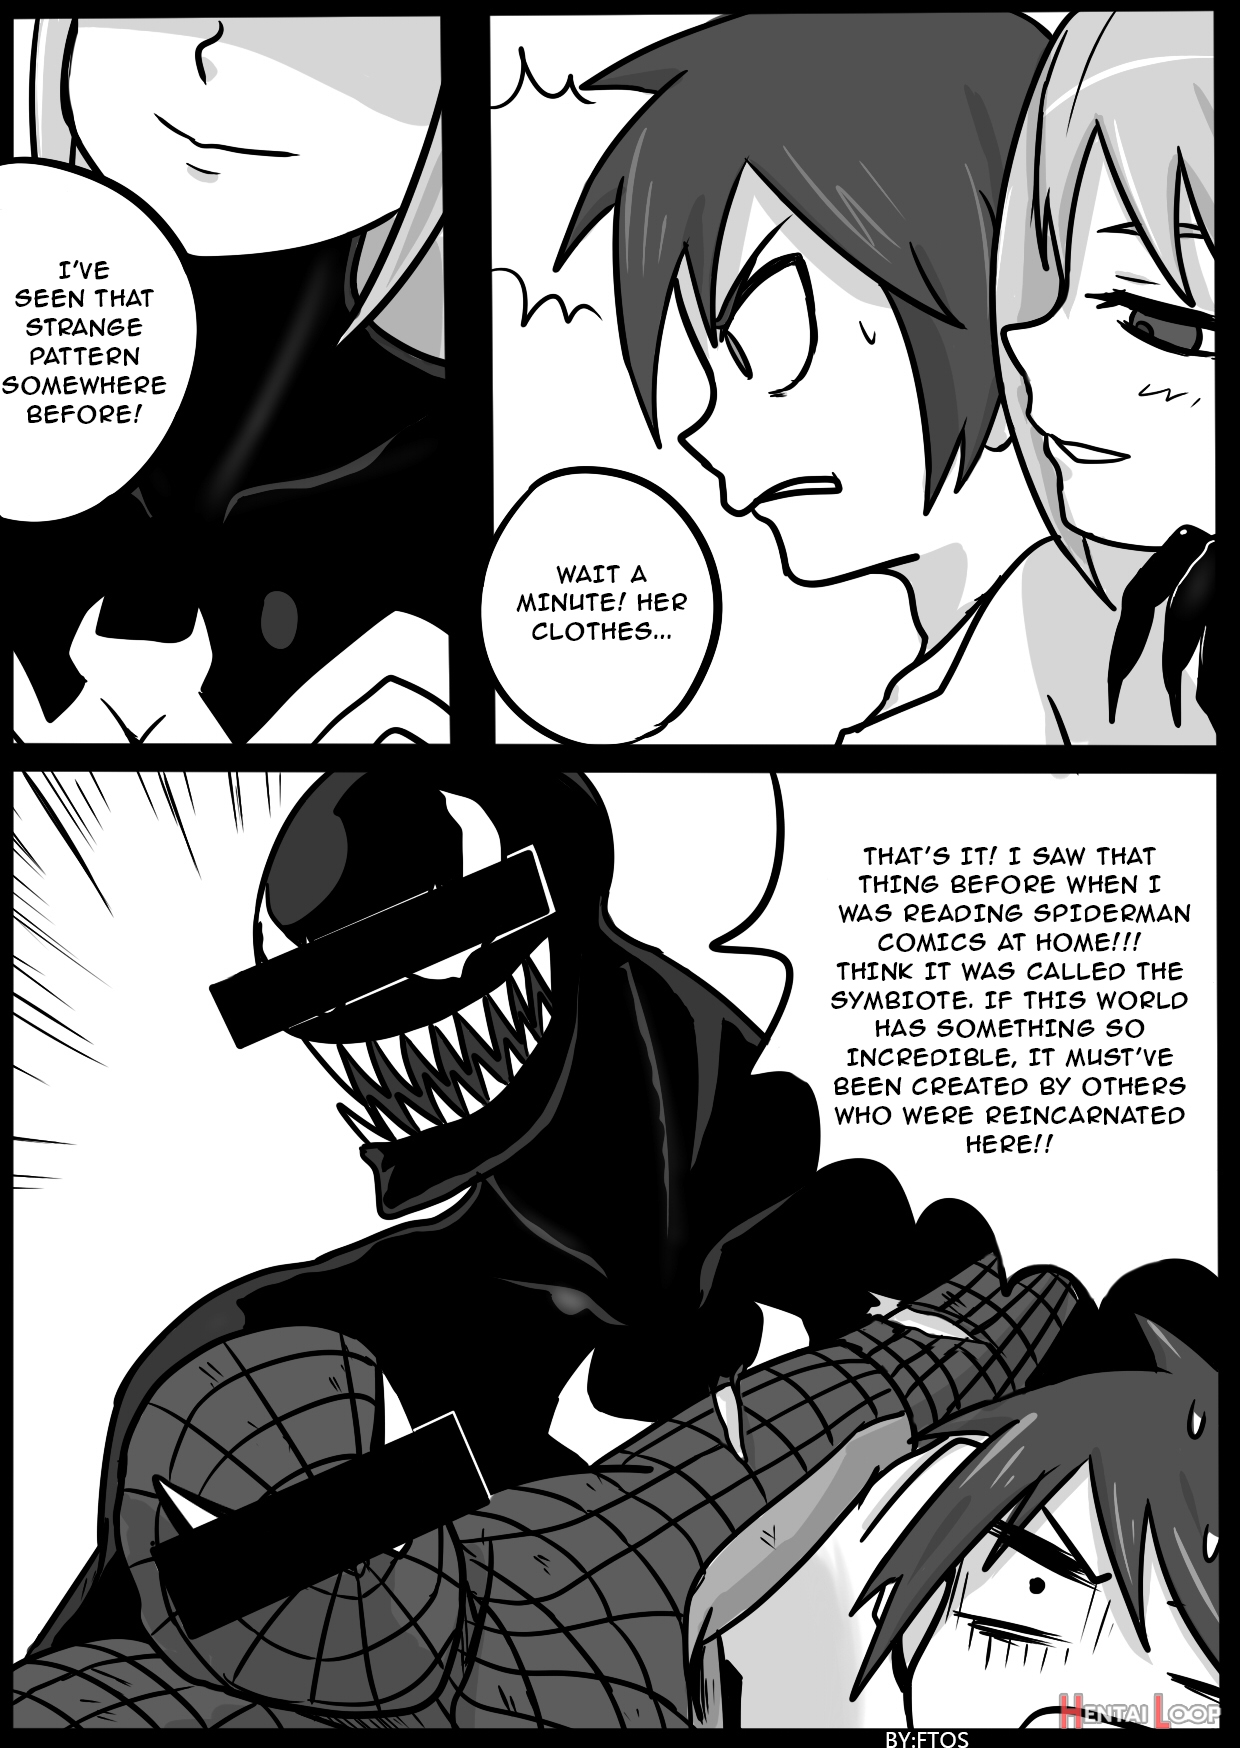 Spreading Venom On This Wonderful World page 29